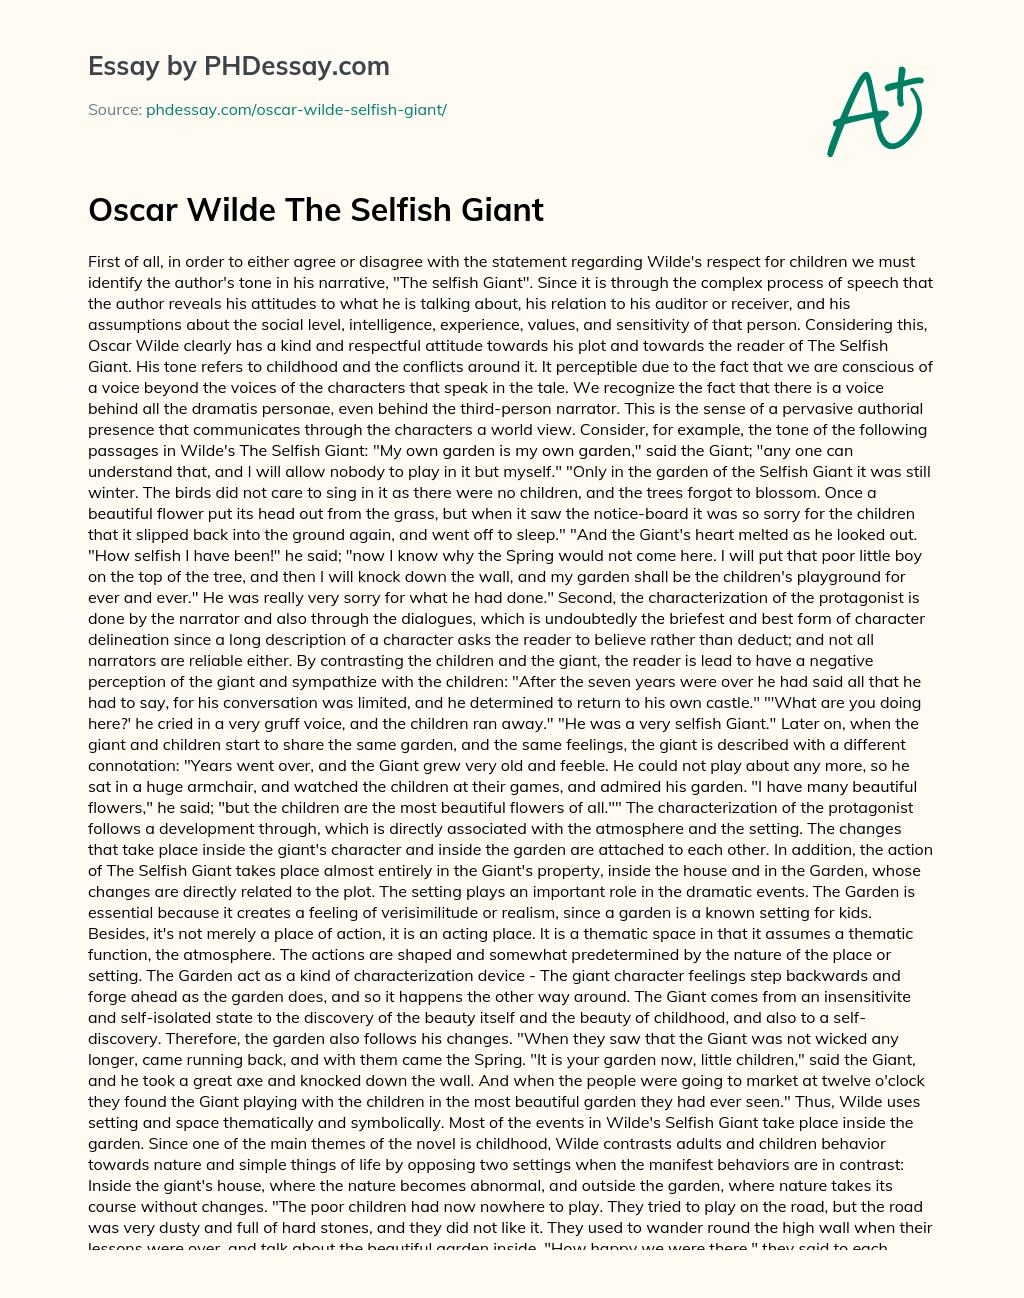 Oscar Wilde The Selfish Giant essay